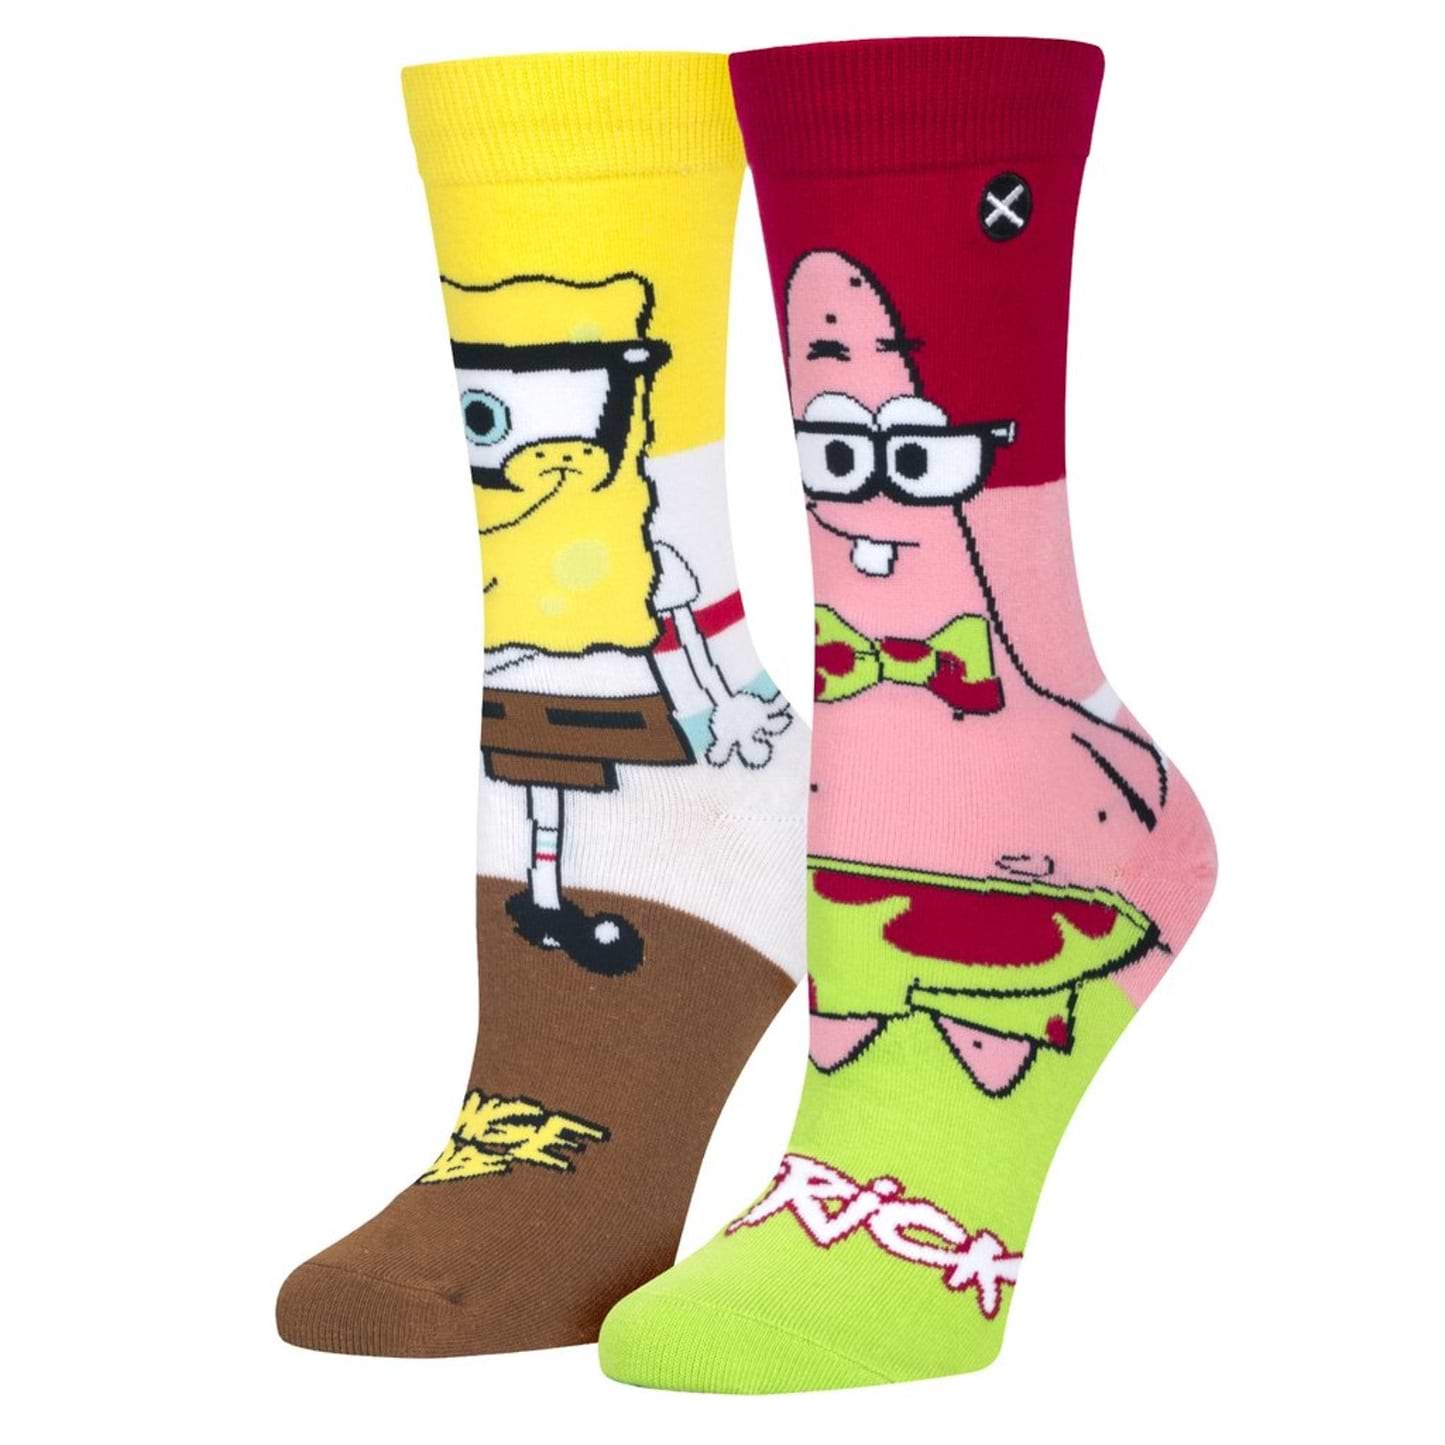 Odd Sox - Spongebob Nerdpants - Womens